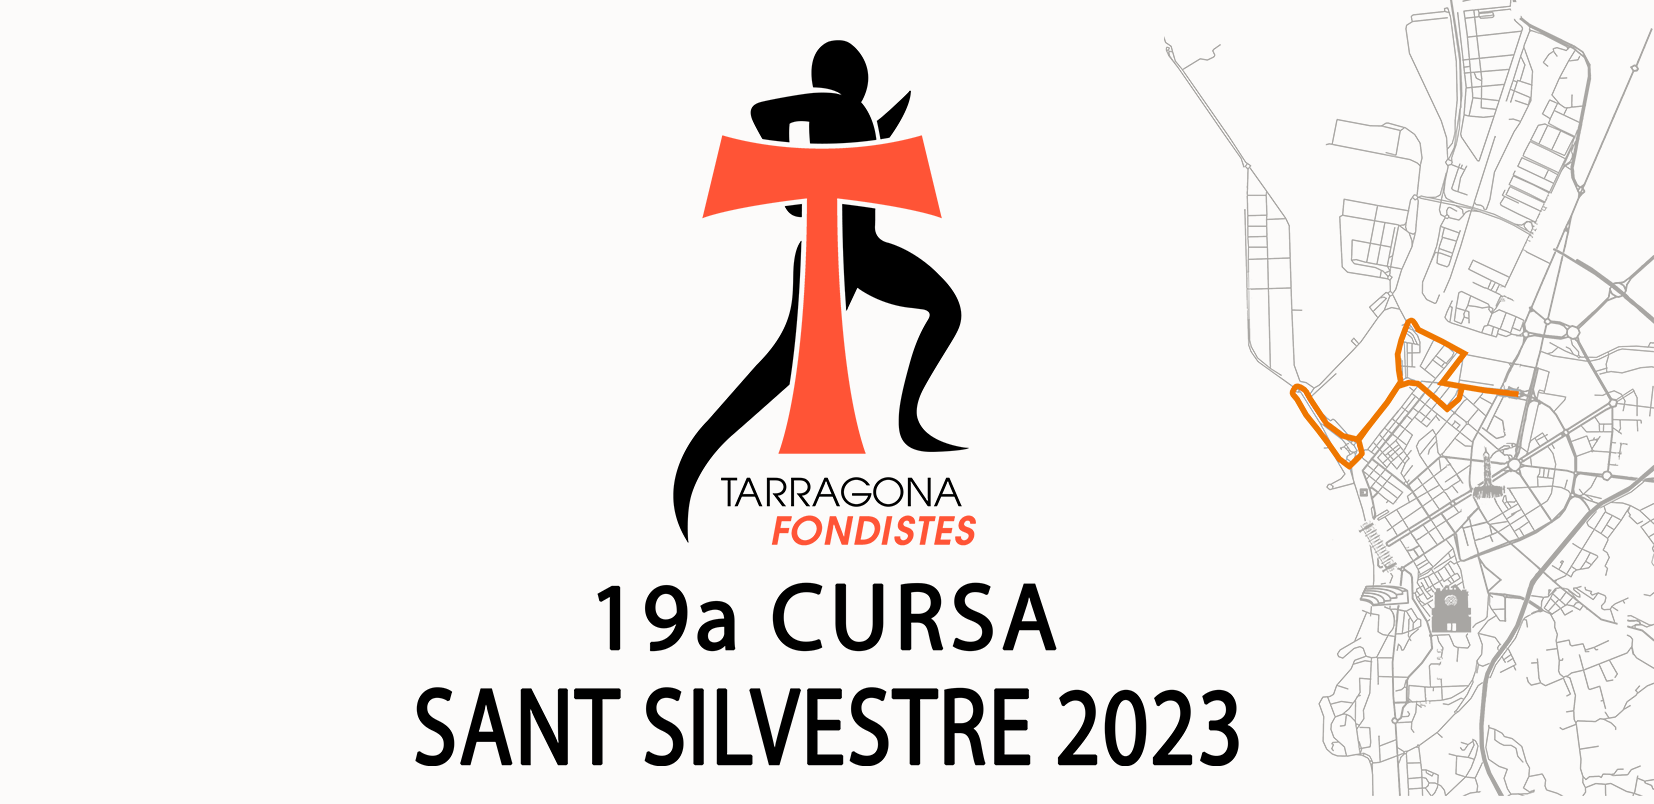 19a CURSA SANT SILVESTRE 2023 - TARRAGONA